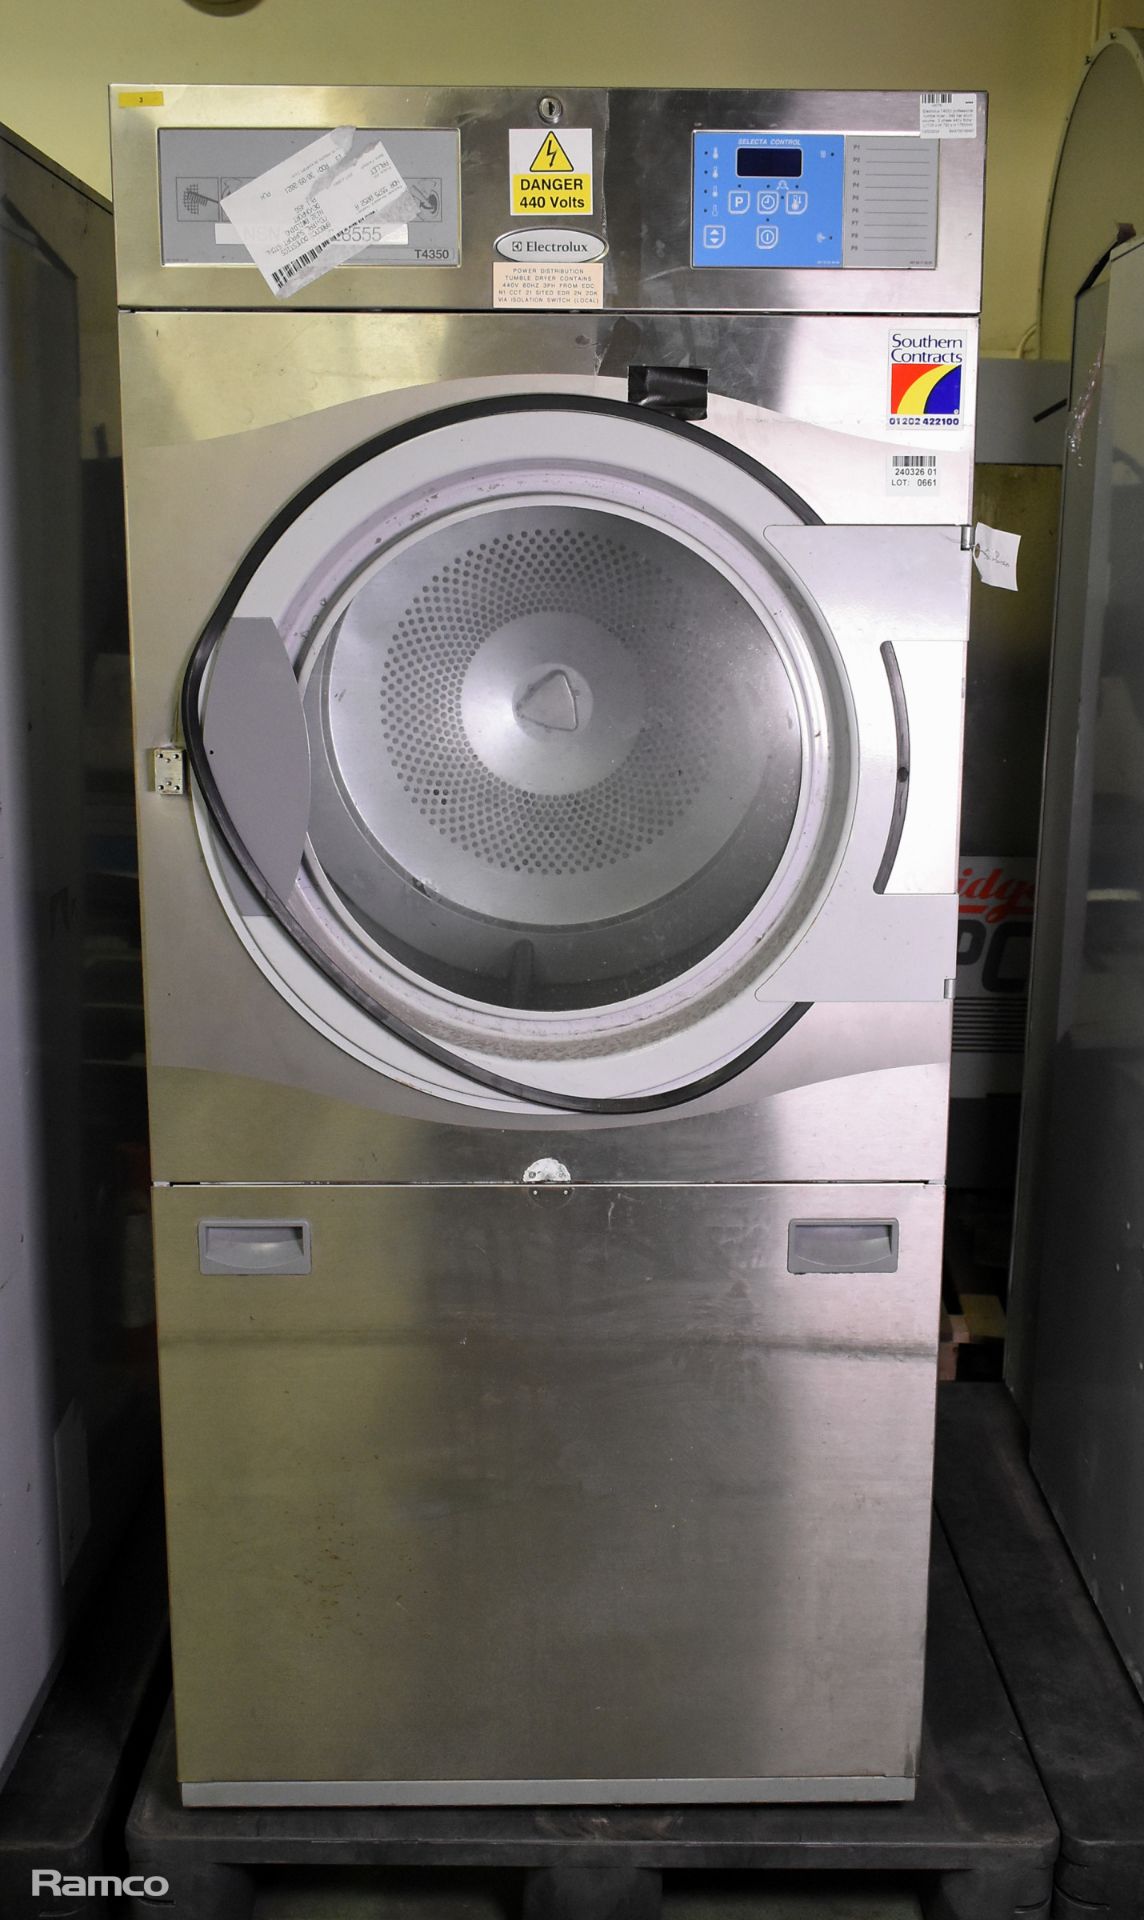 Electrolux T4350 professional tumble dryer - 349 litre drum volume - 3 phase 440V 60Hz